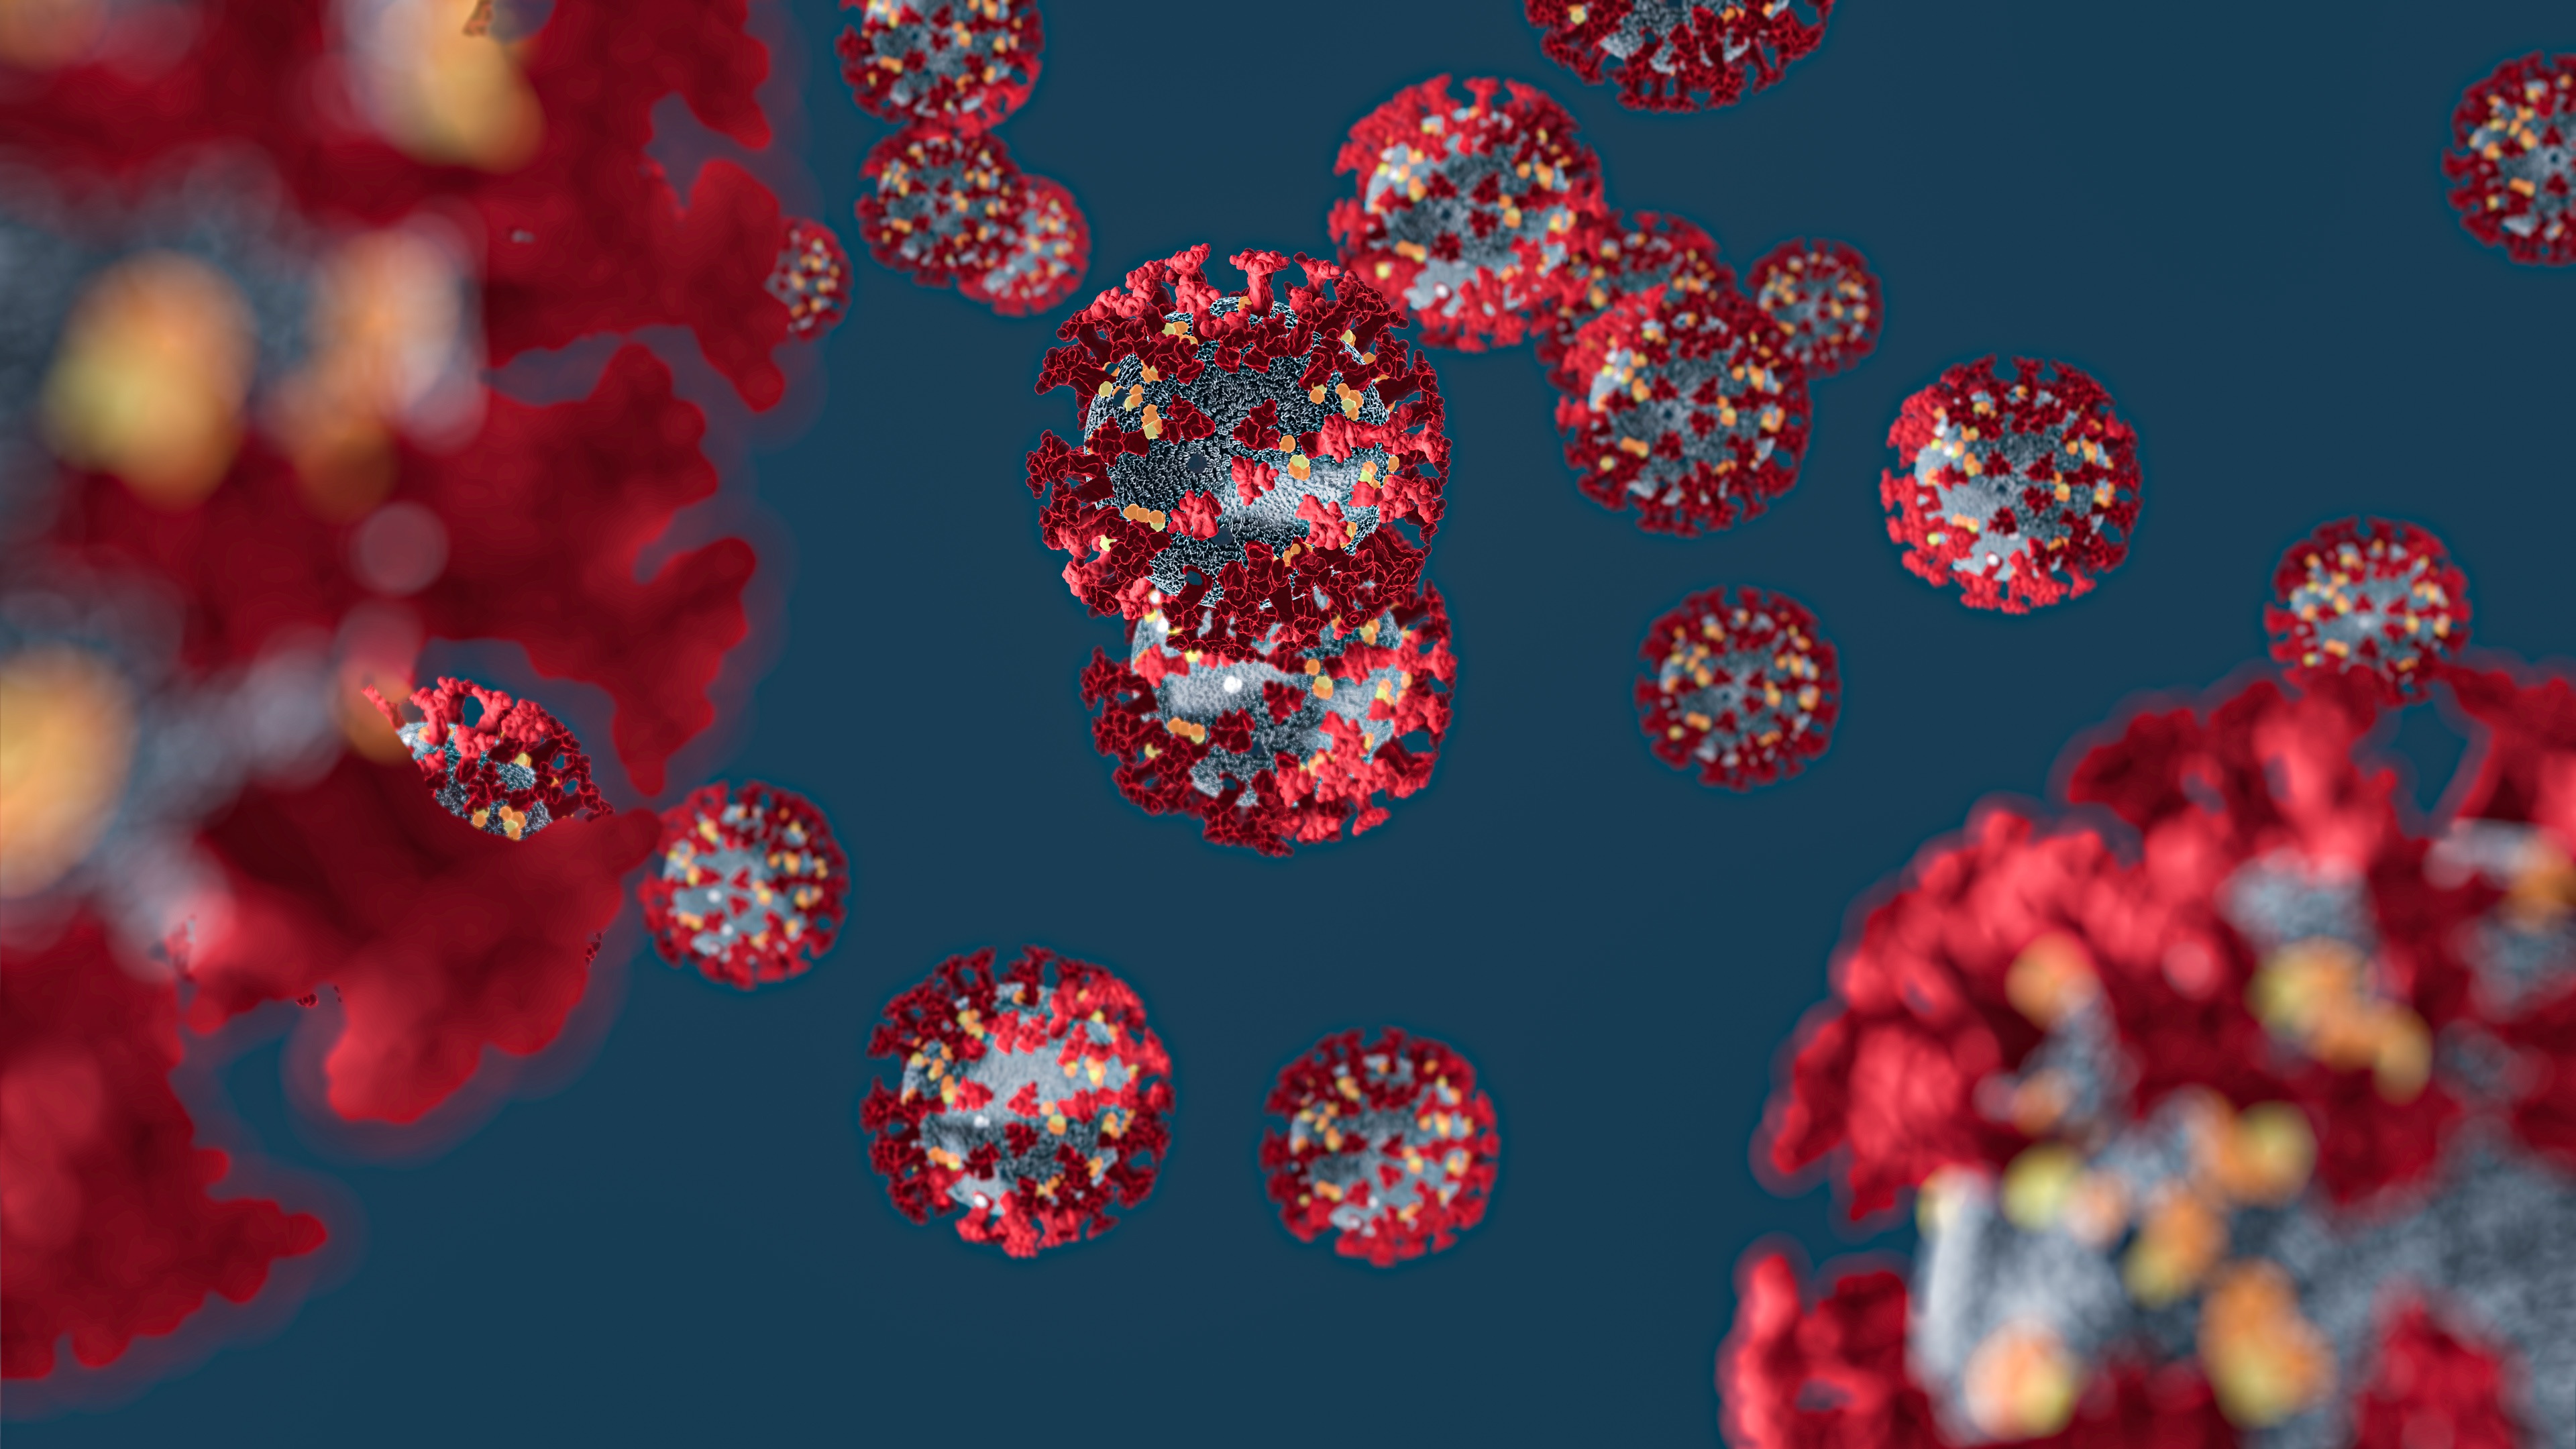 Image of Corona Virus by mattthewafflecat from Pixabay